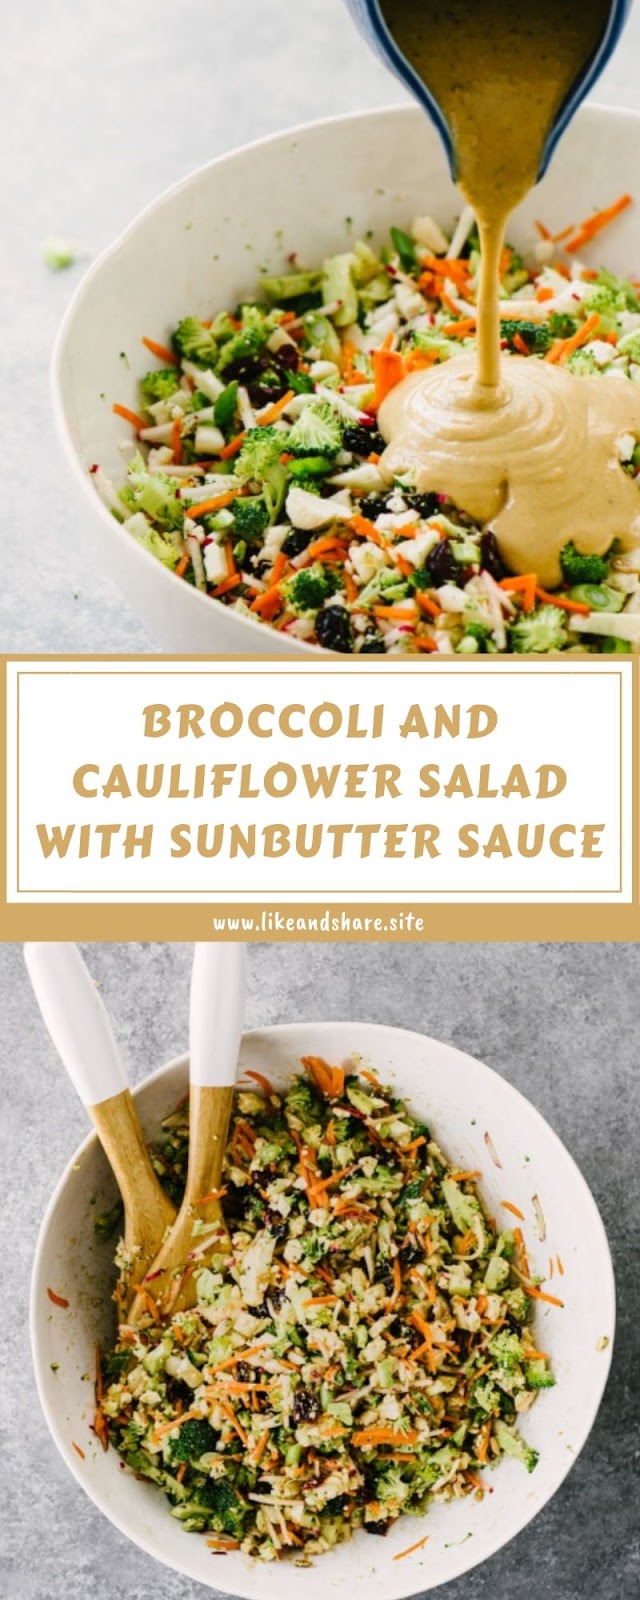 BROCCOLI AND CAULIFLOWER SALAD WITH SUNBUTTER SAUCE